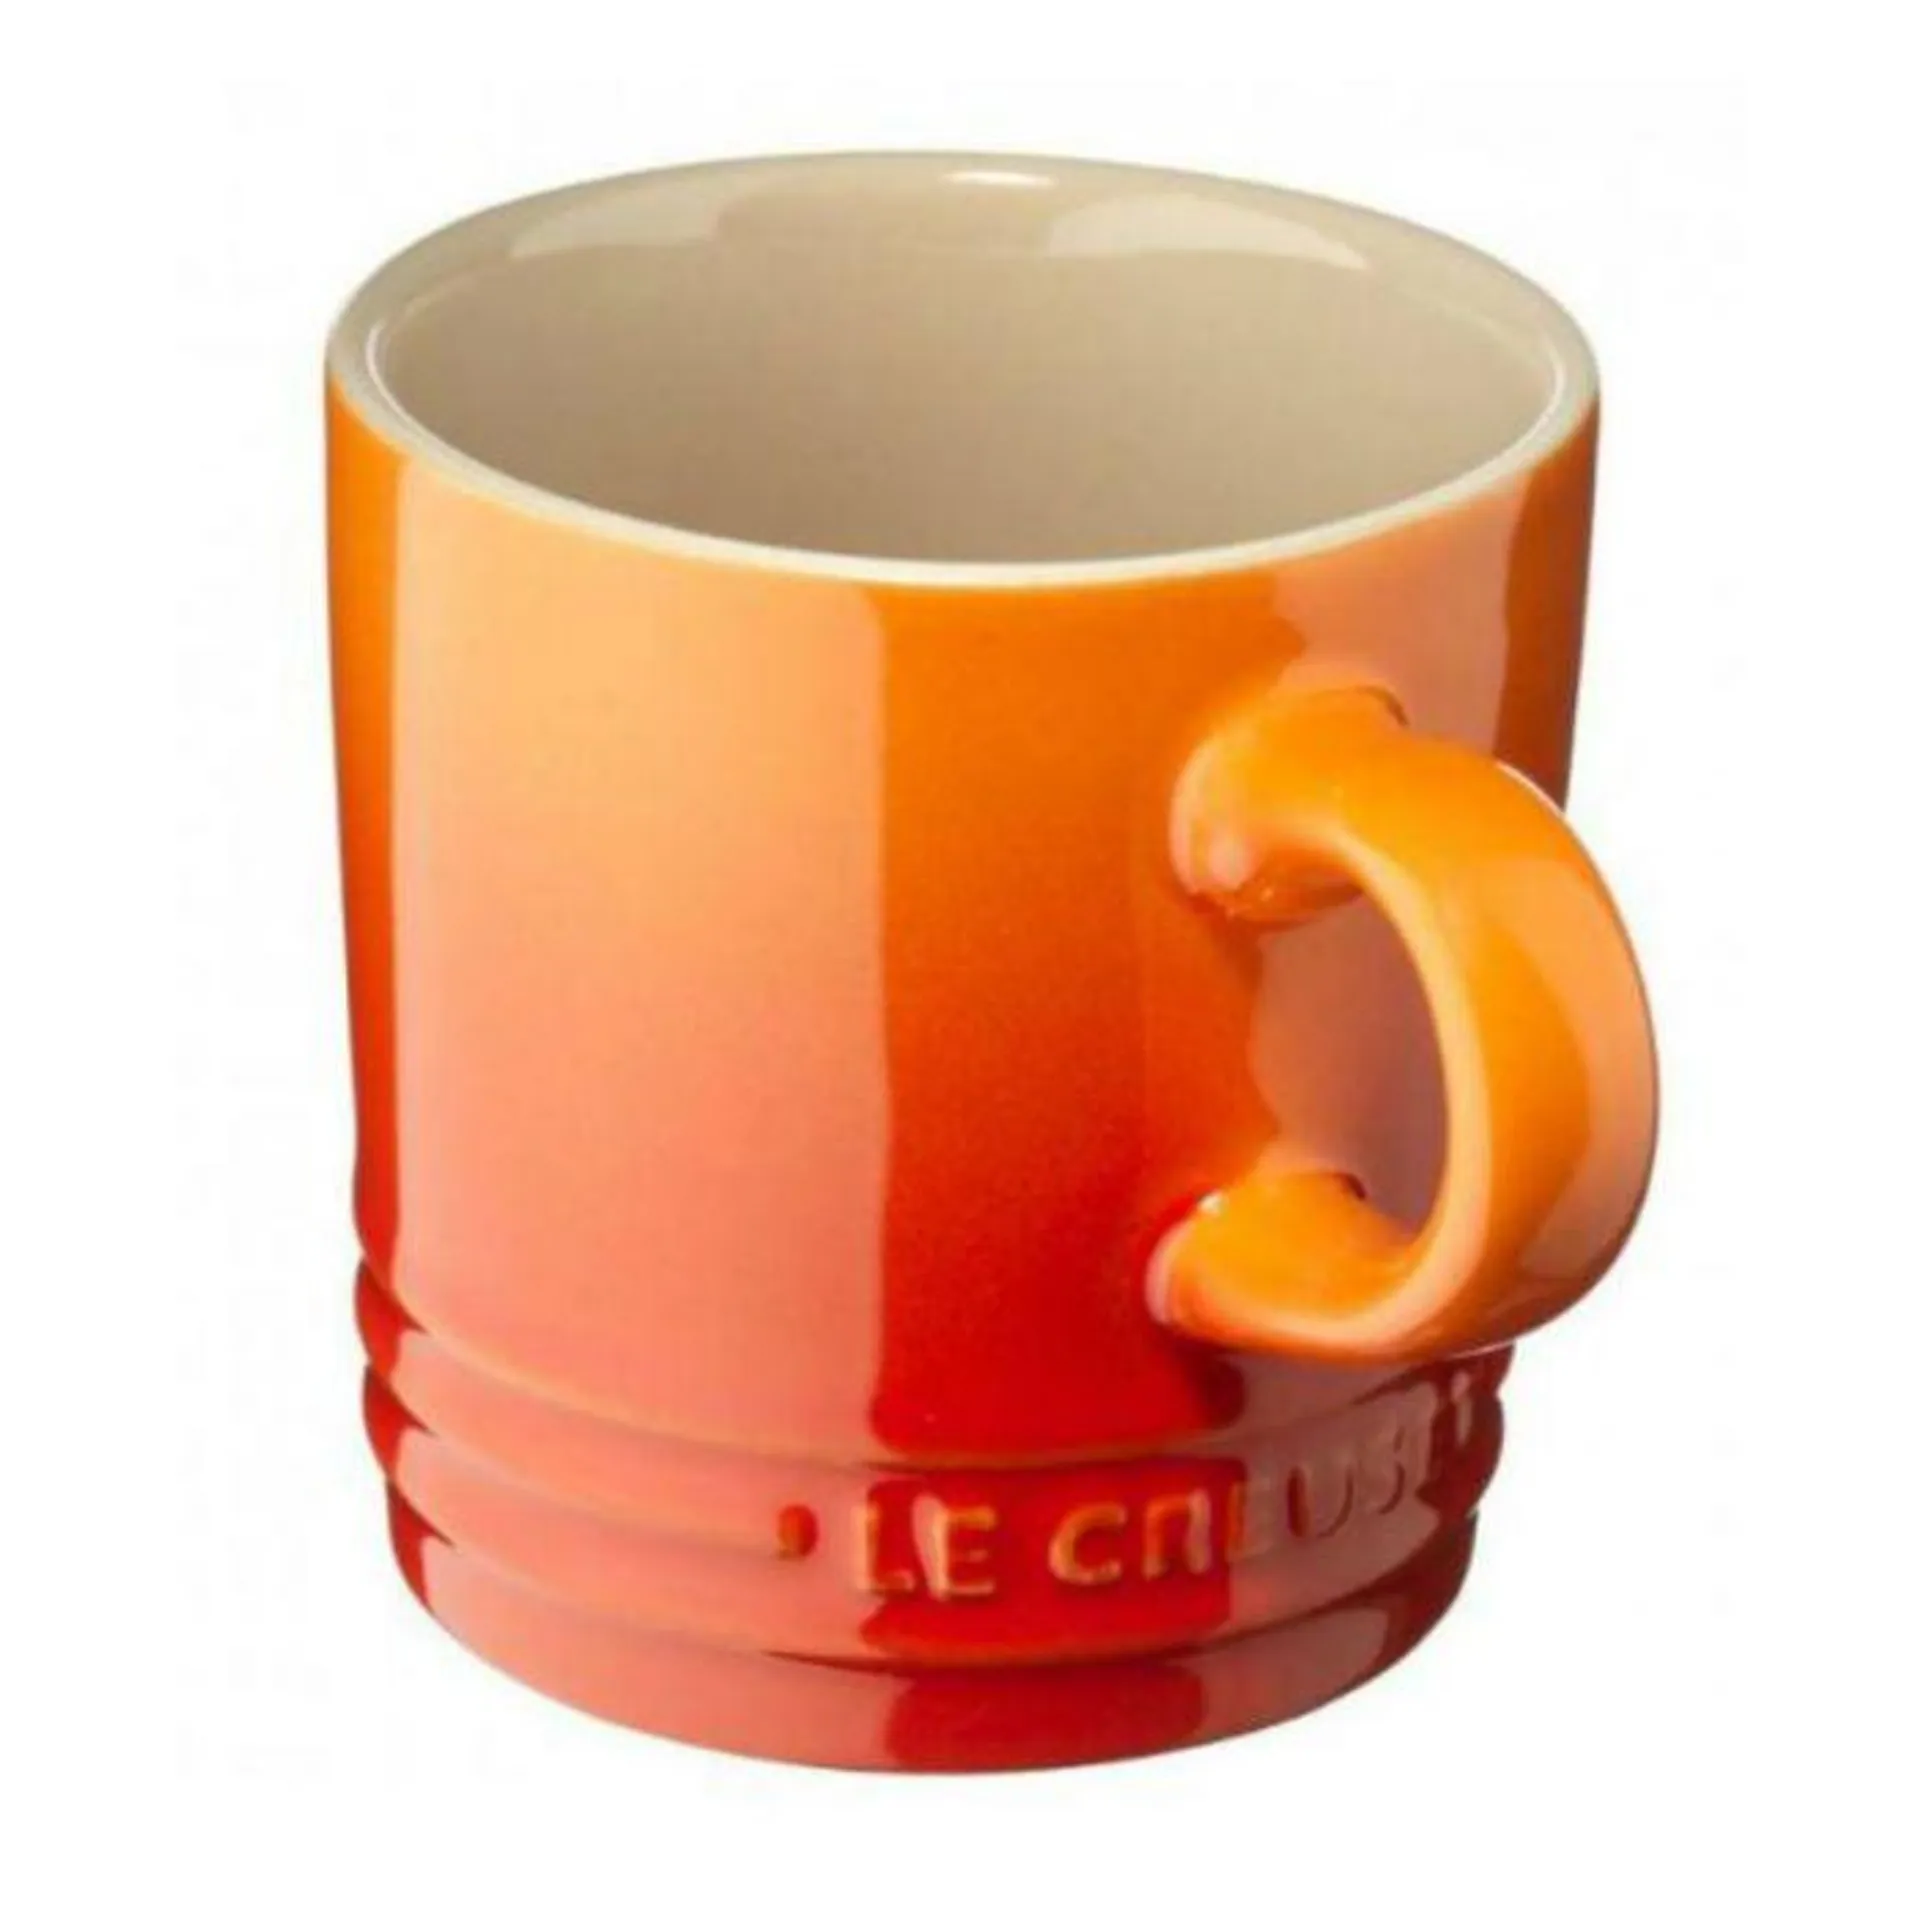 Koffiebeker Le Creuset oranje-rood